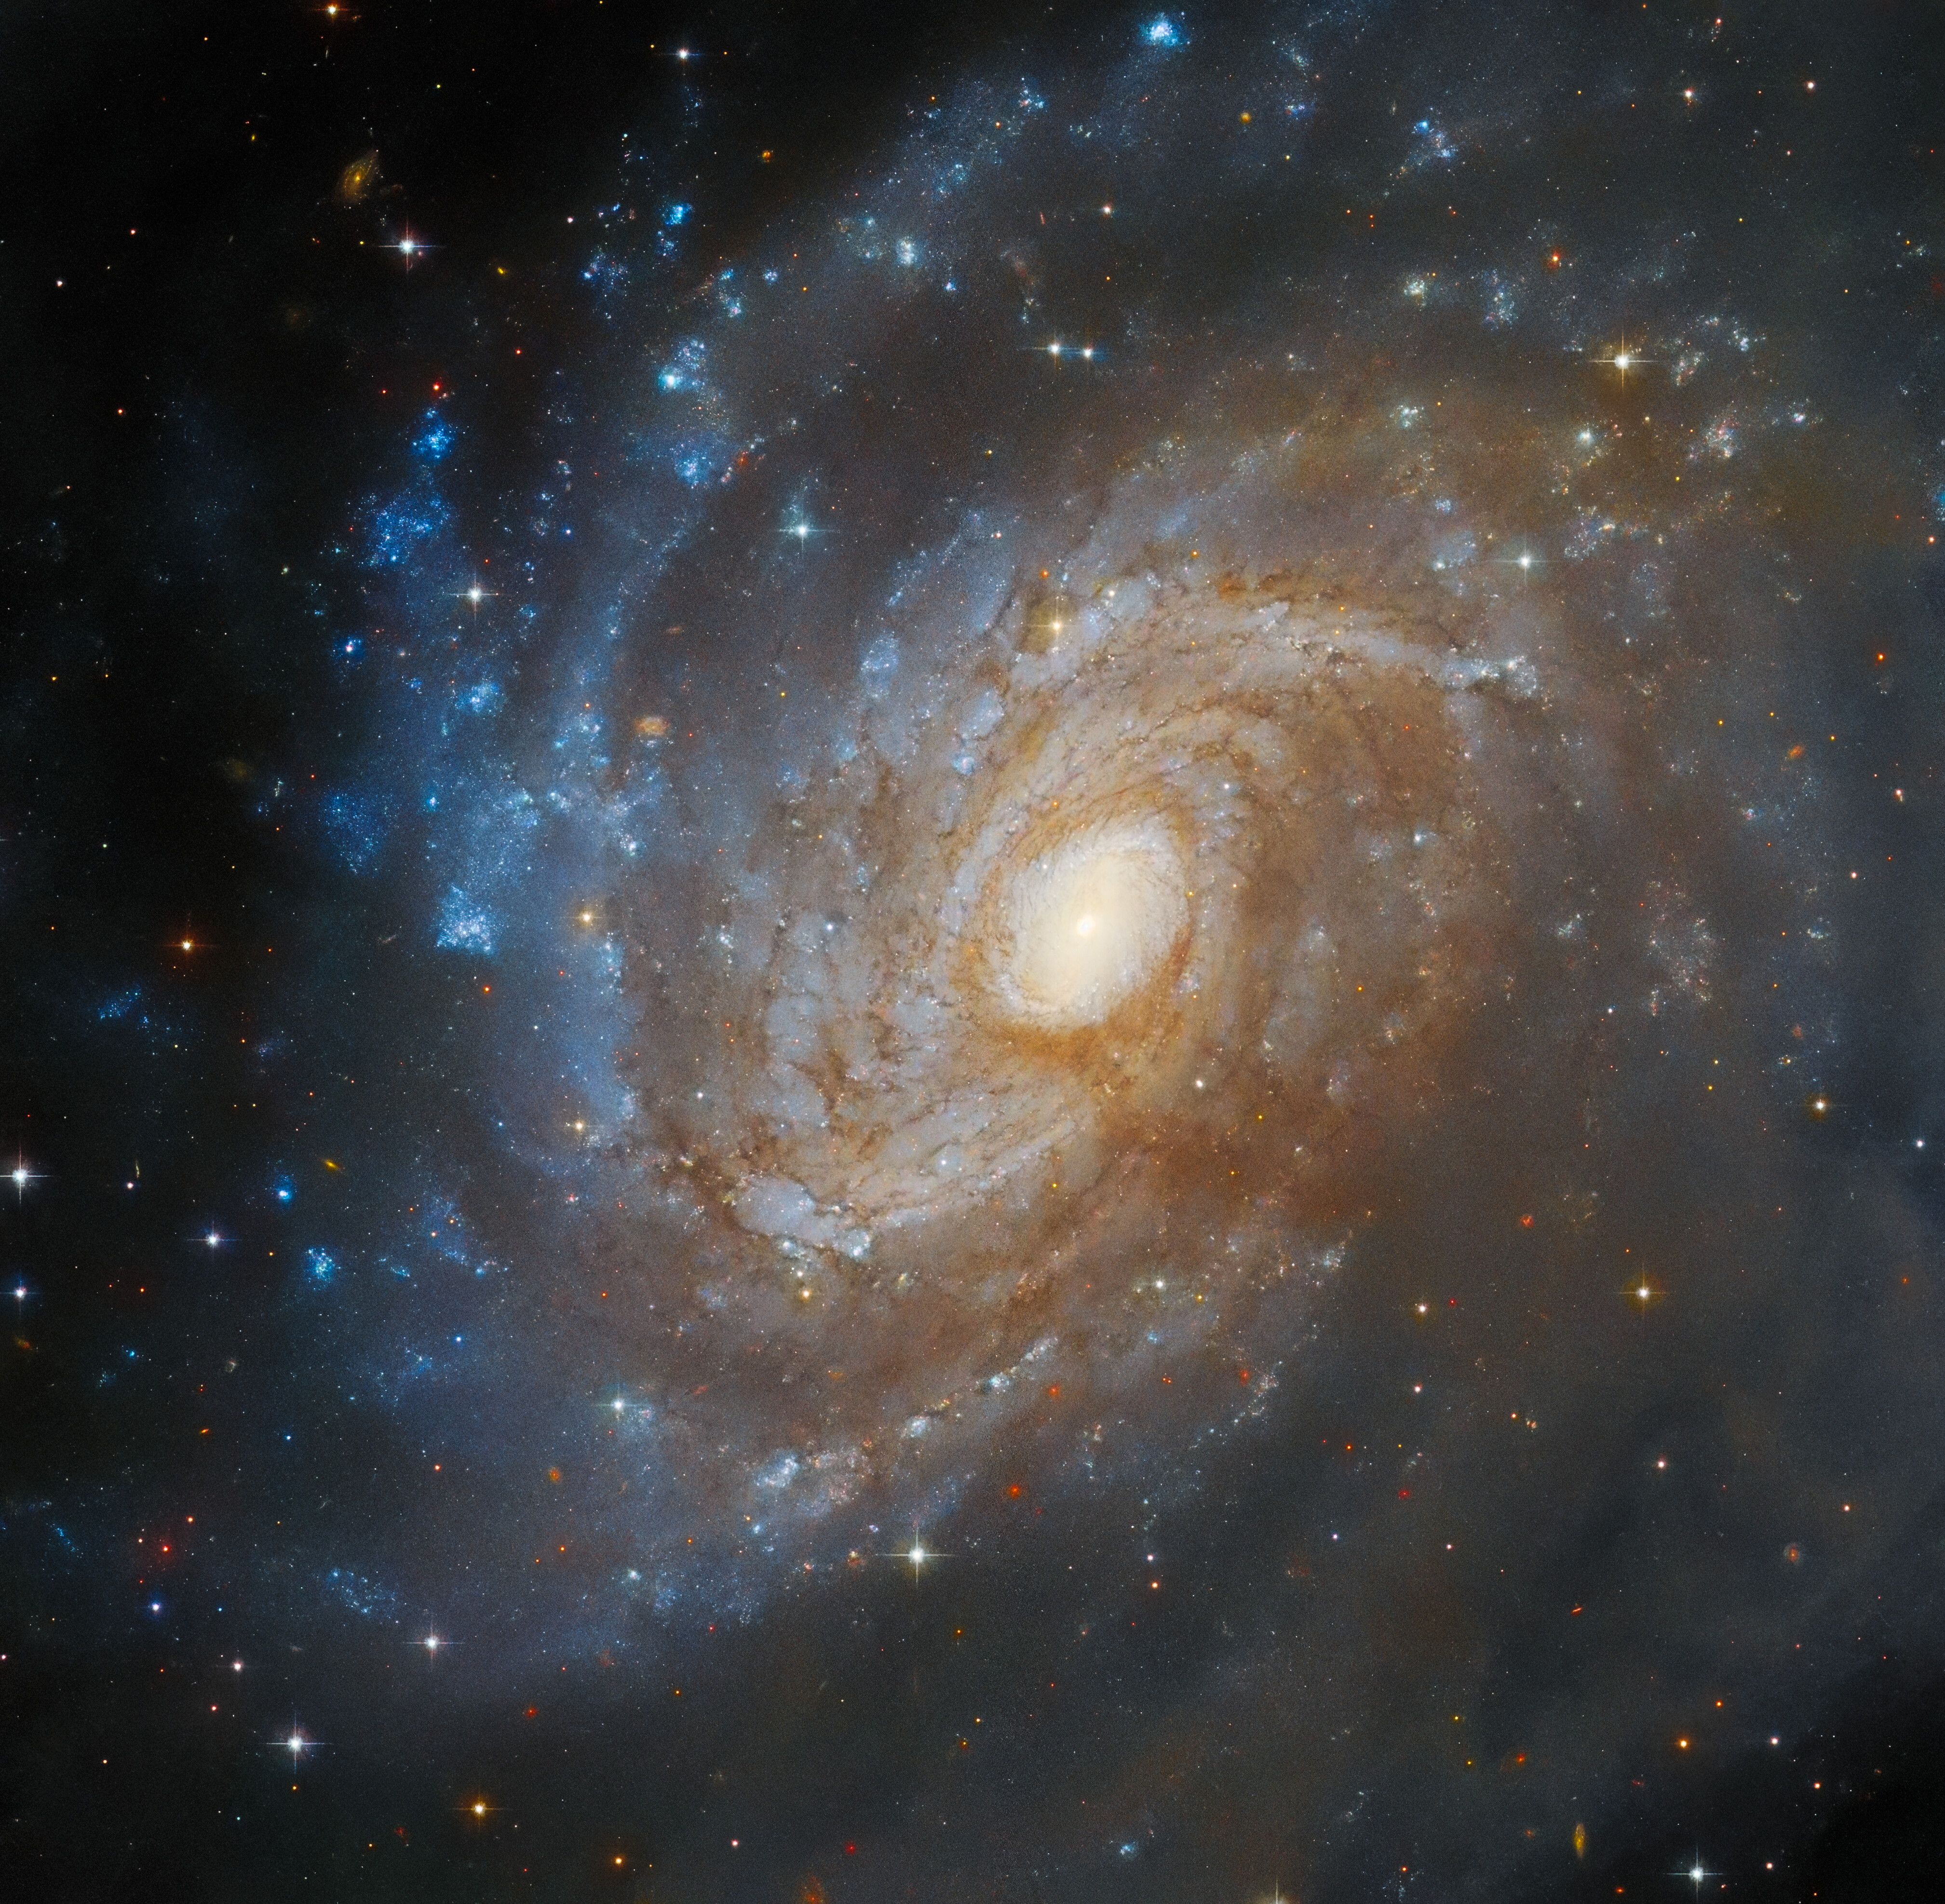 Hubble Spots a Galaxy Hidden in a Dark Cloud